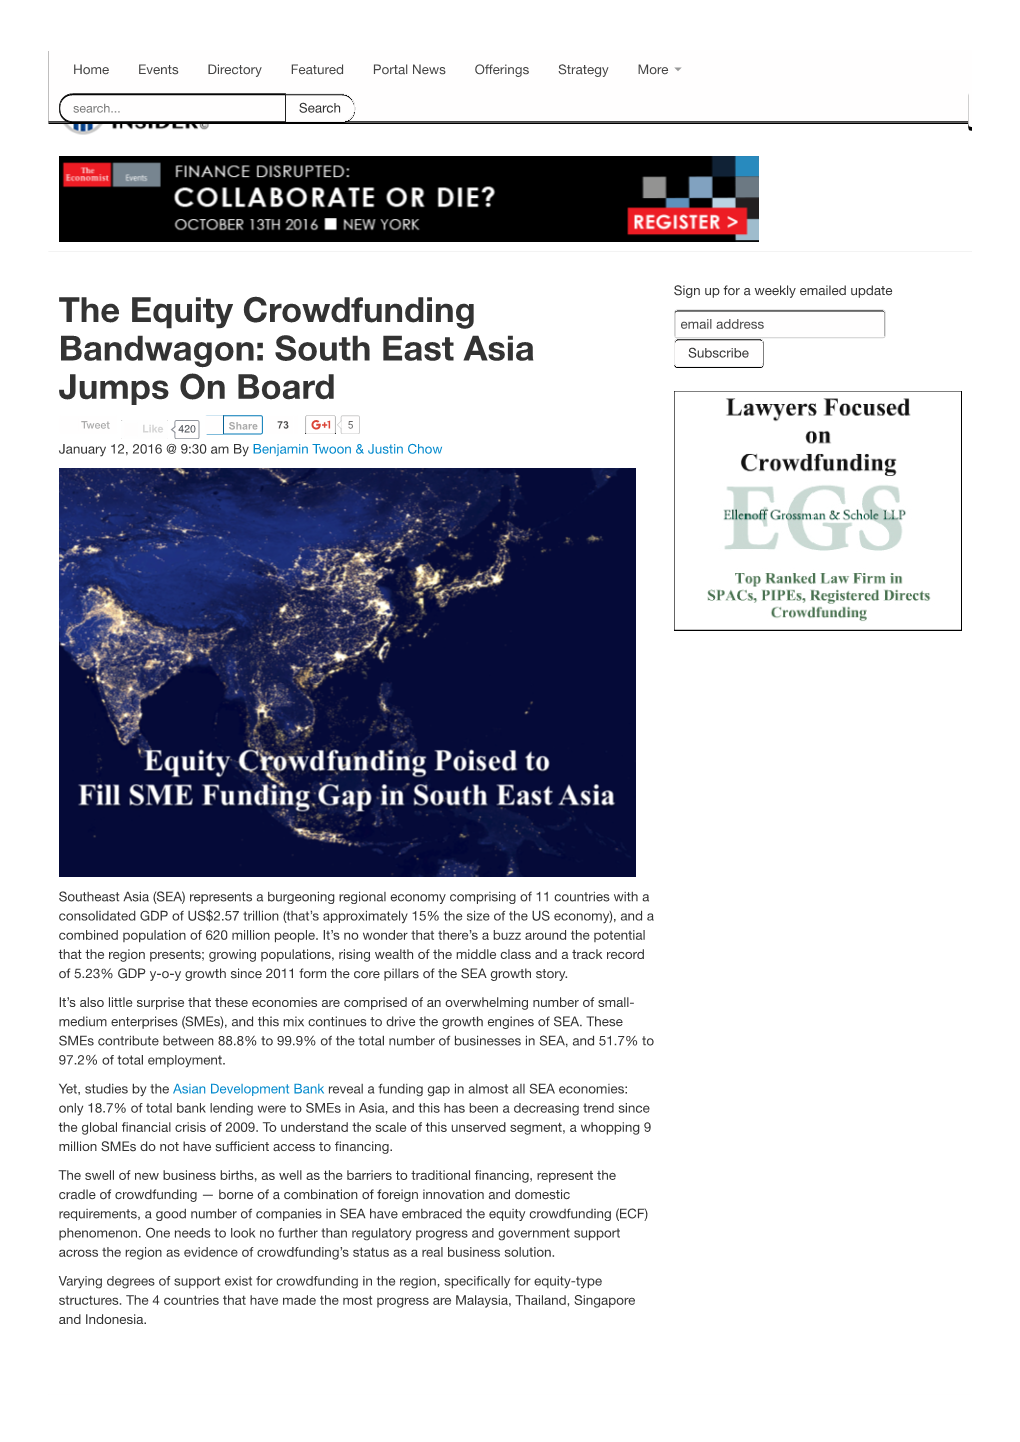 The Equity Crowdfunding Bandwagon